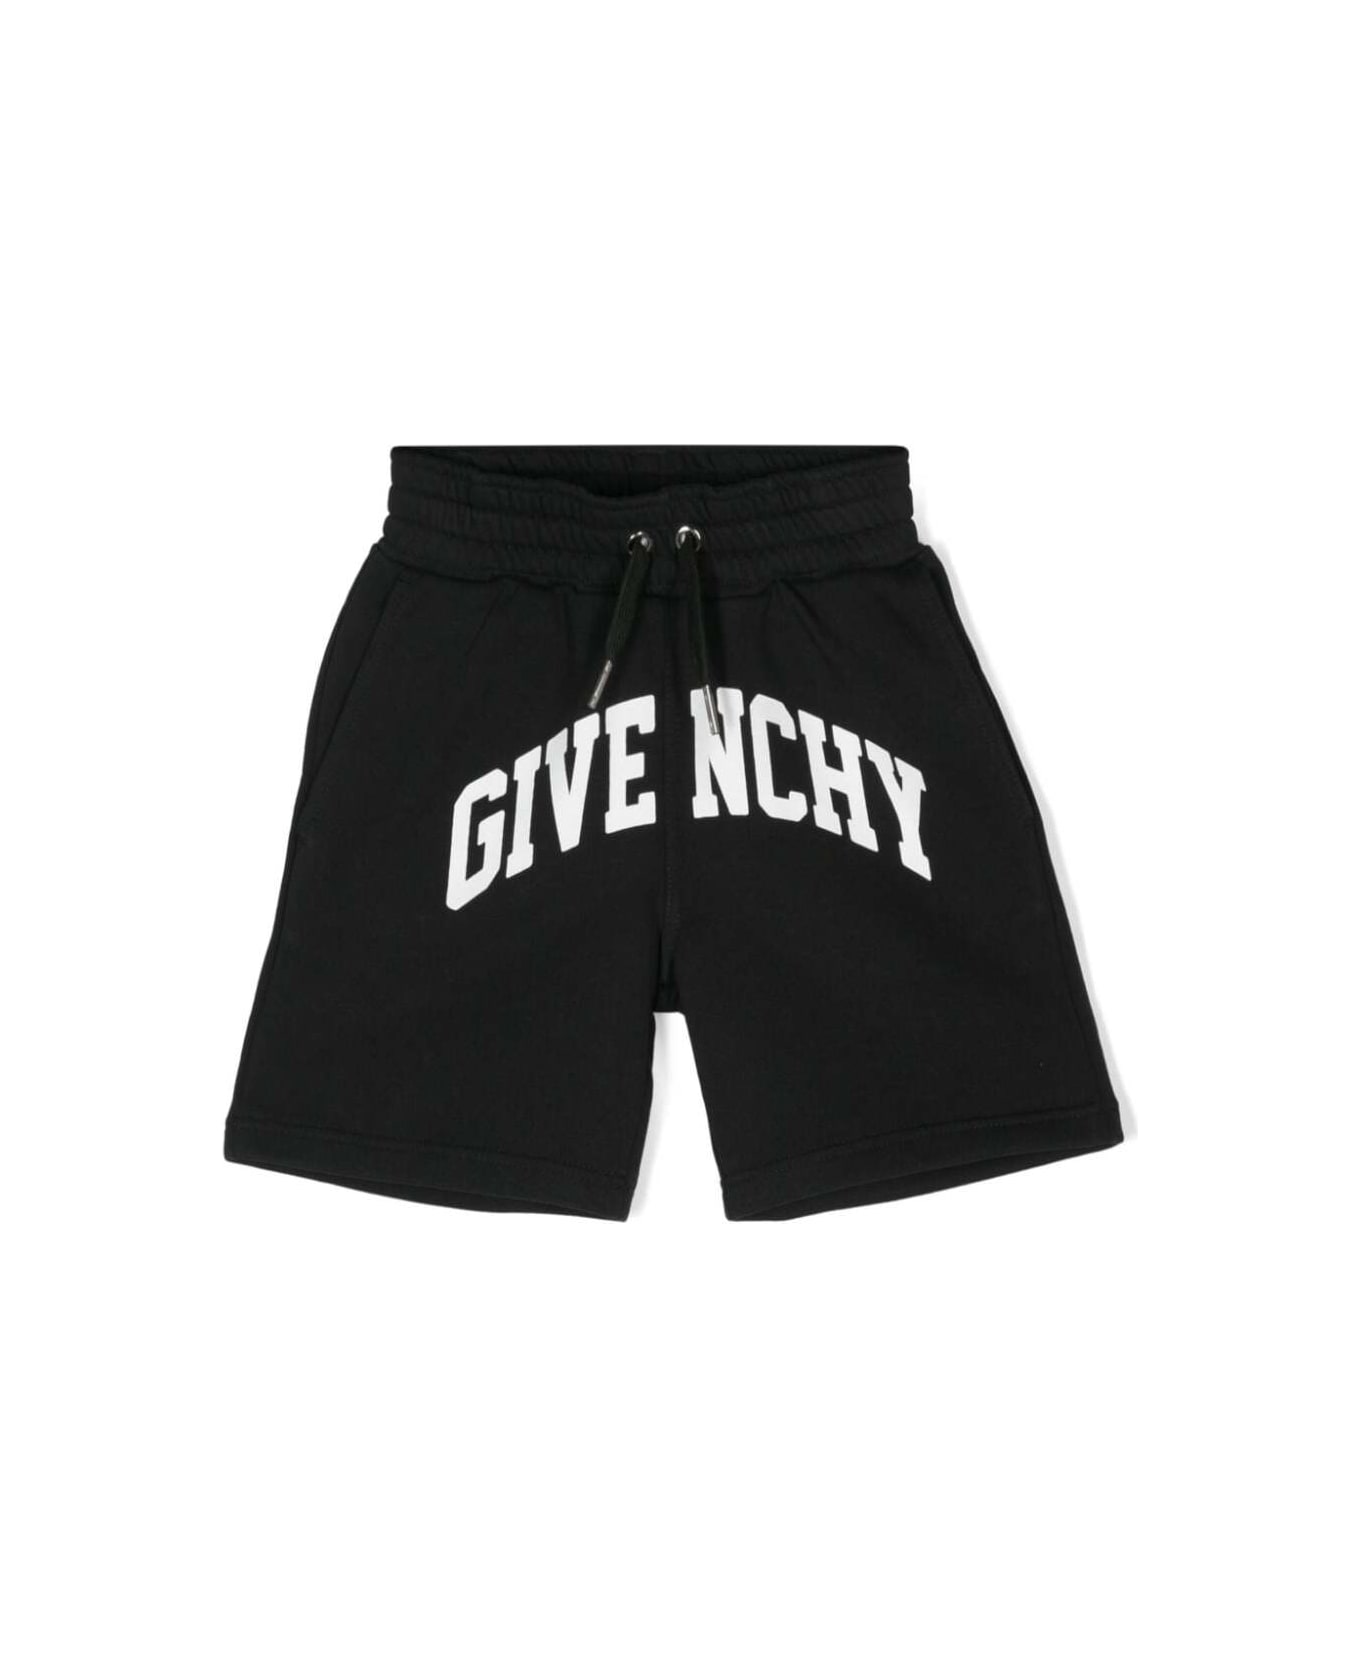 Givenchy H3013709b - B Nero